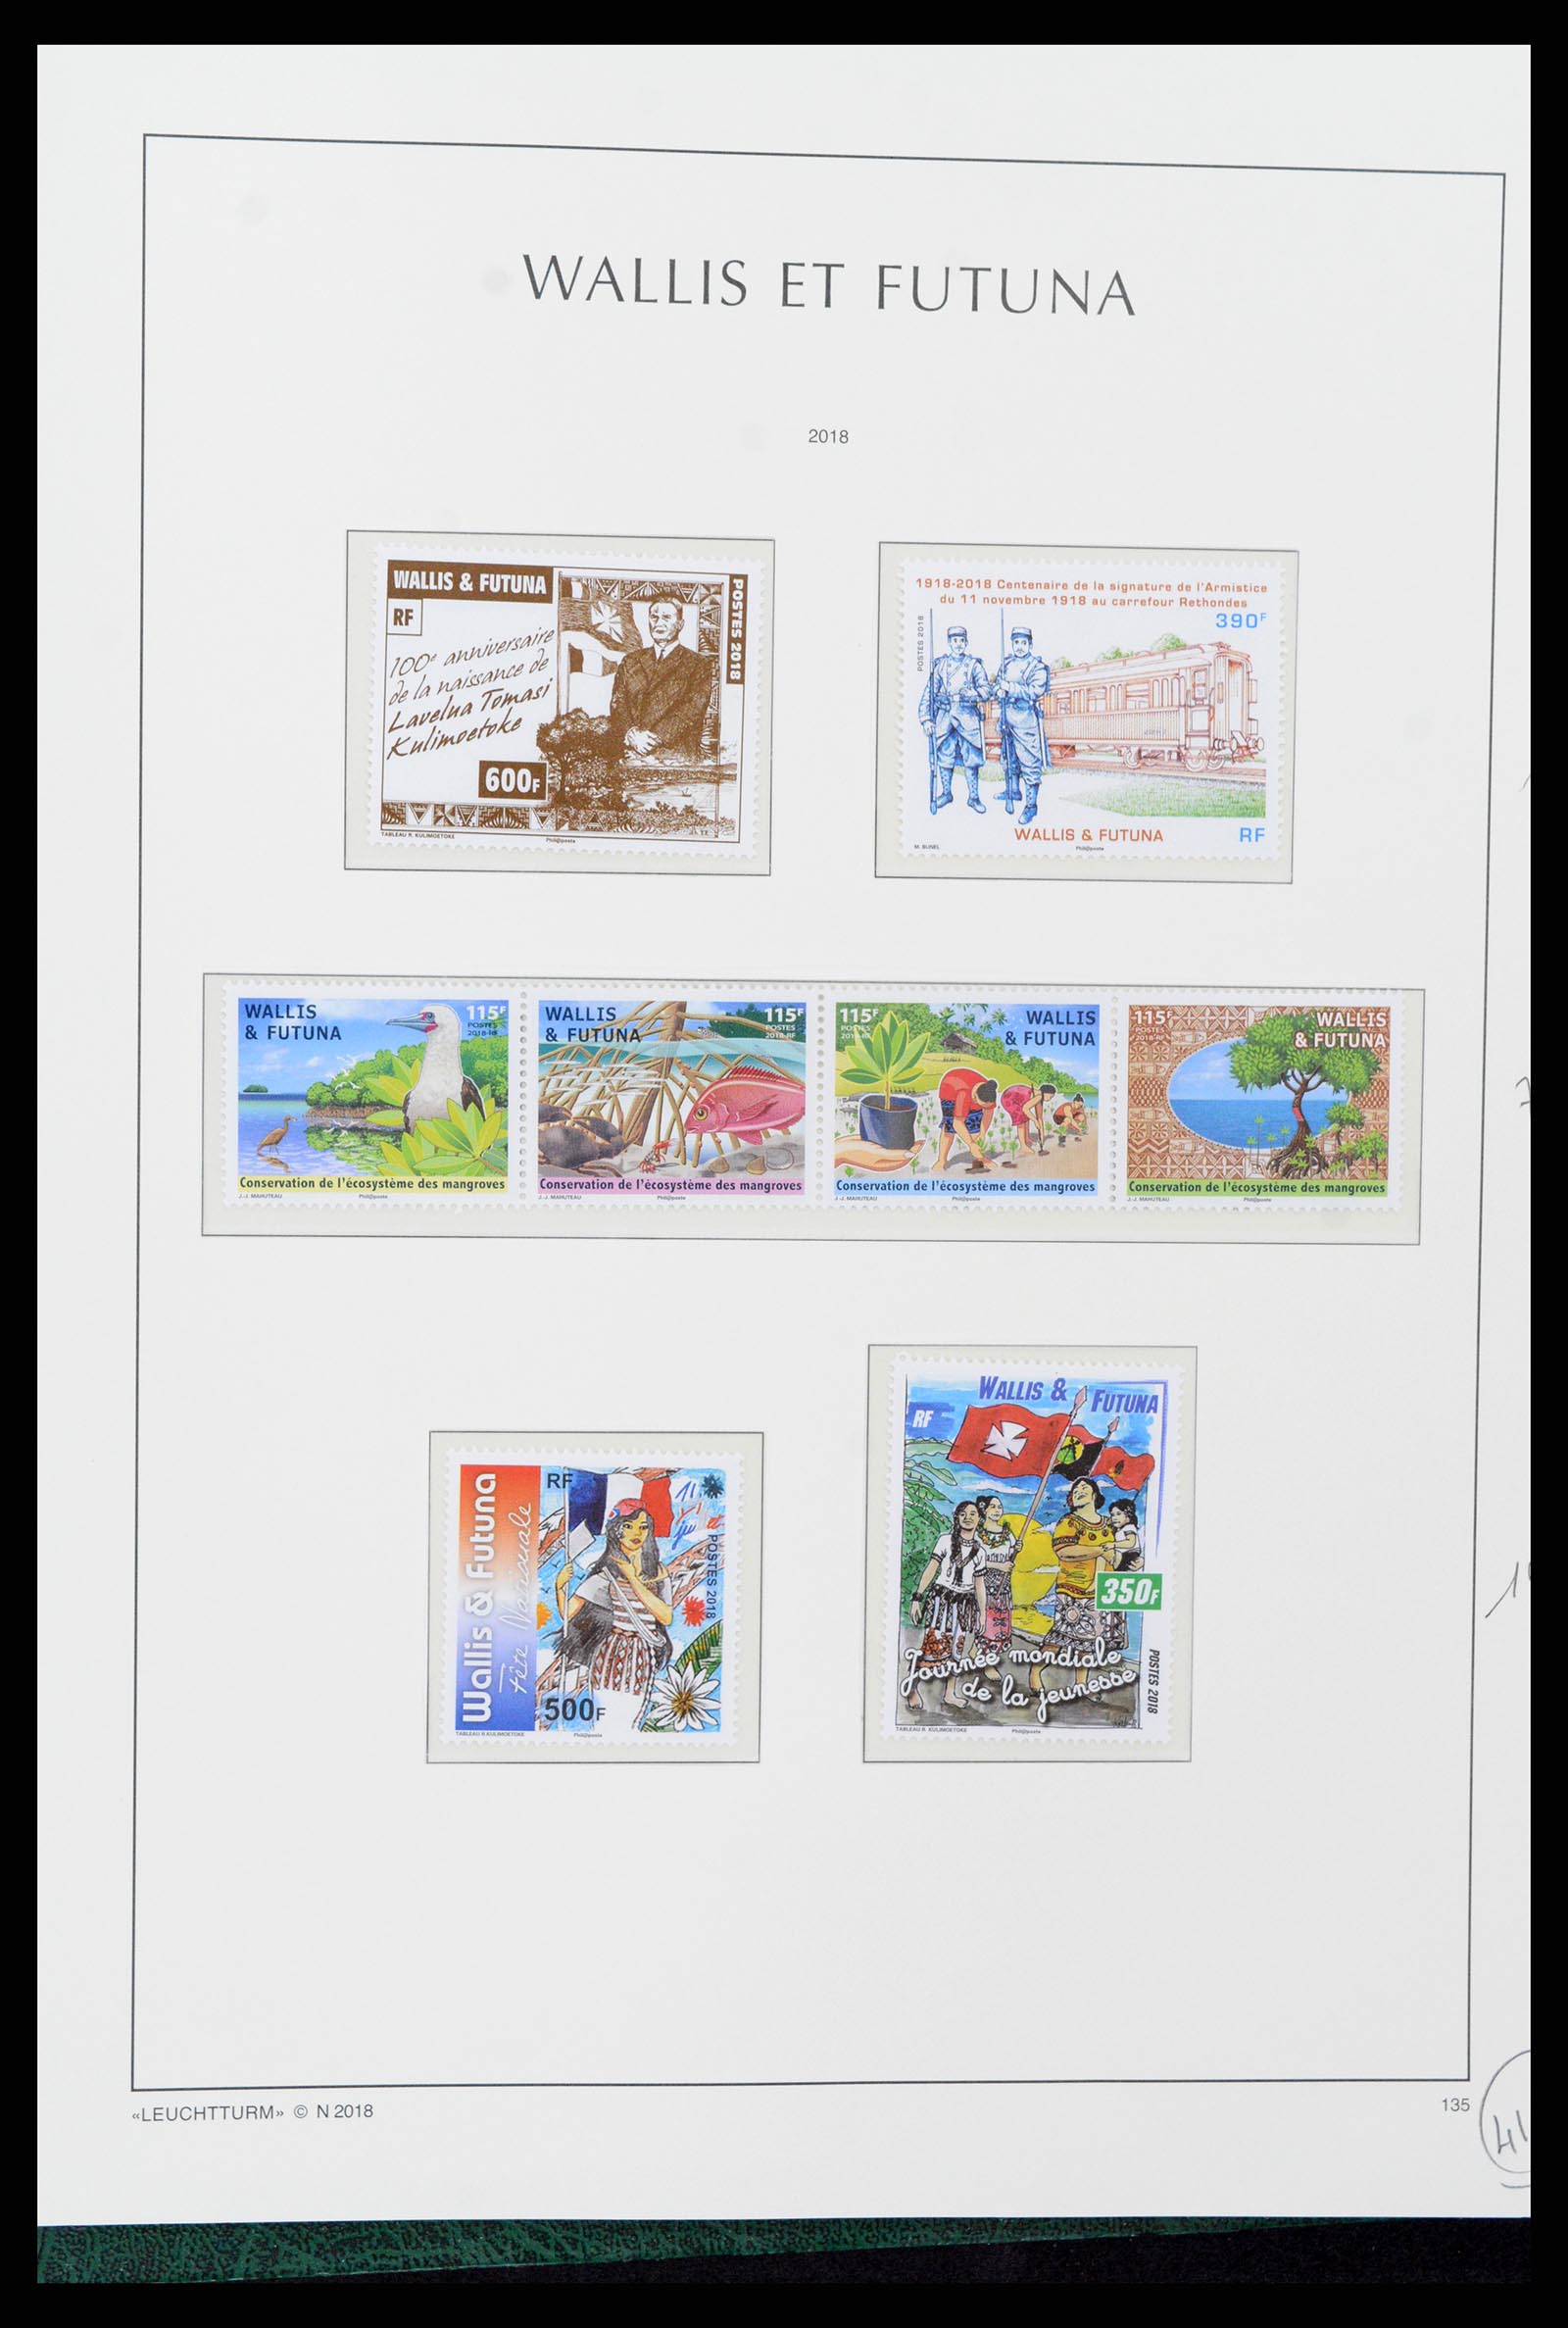 37316 102 - Stamp collection 37316 Wallis et Futuna 1980-2018!